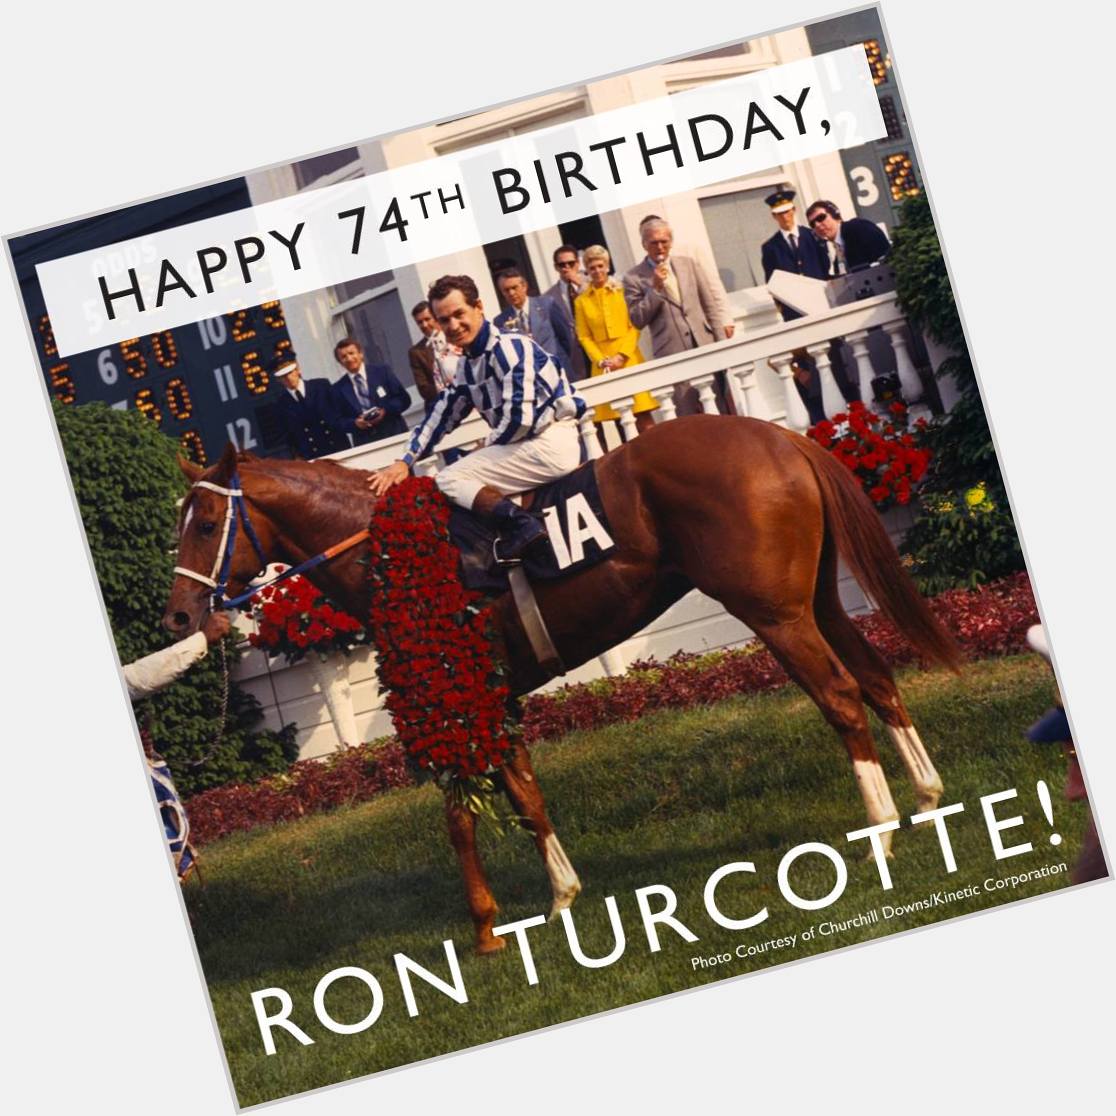 Happy 74th birthday Ron Turcotte! After riding 1973 Triple Crown winner Secretariat 